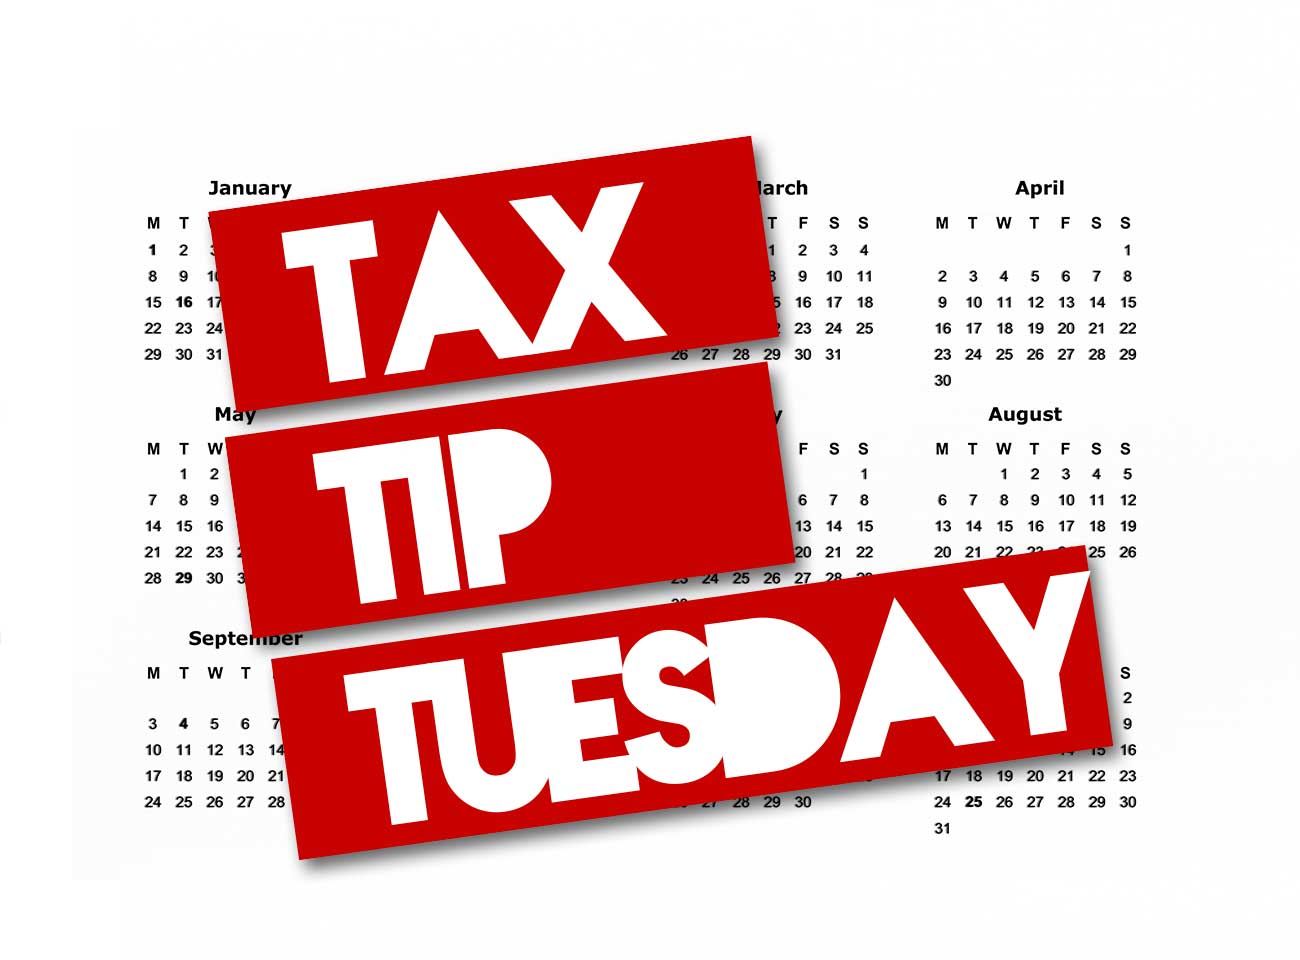 Tax Tip Tuesday Financial Blog Post